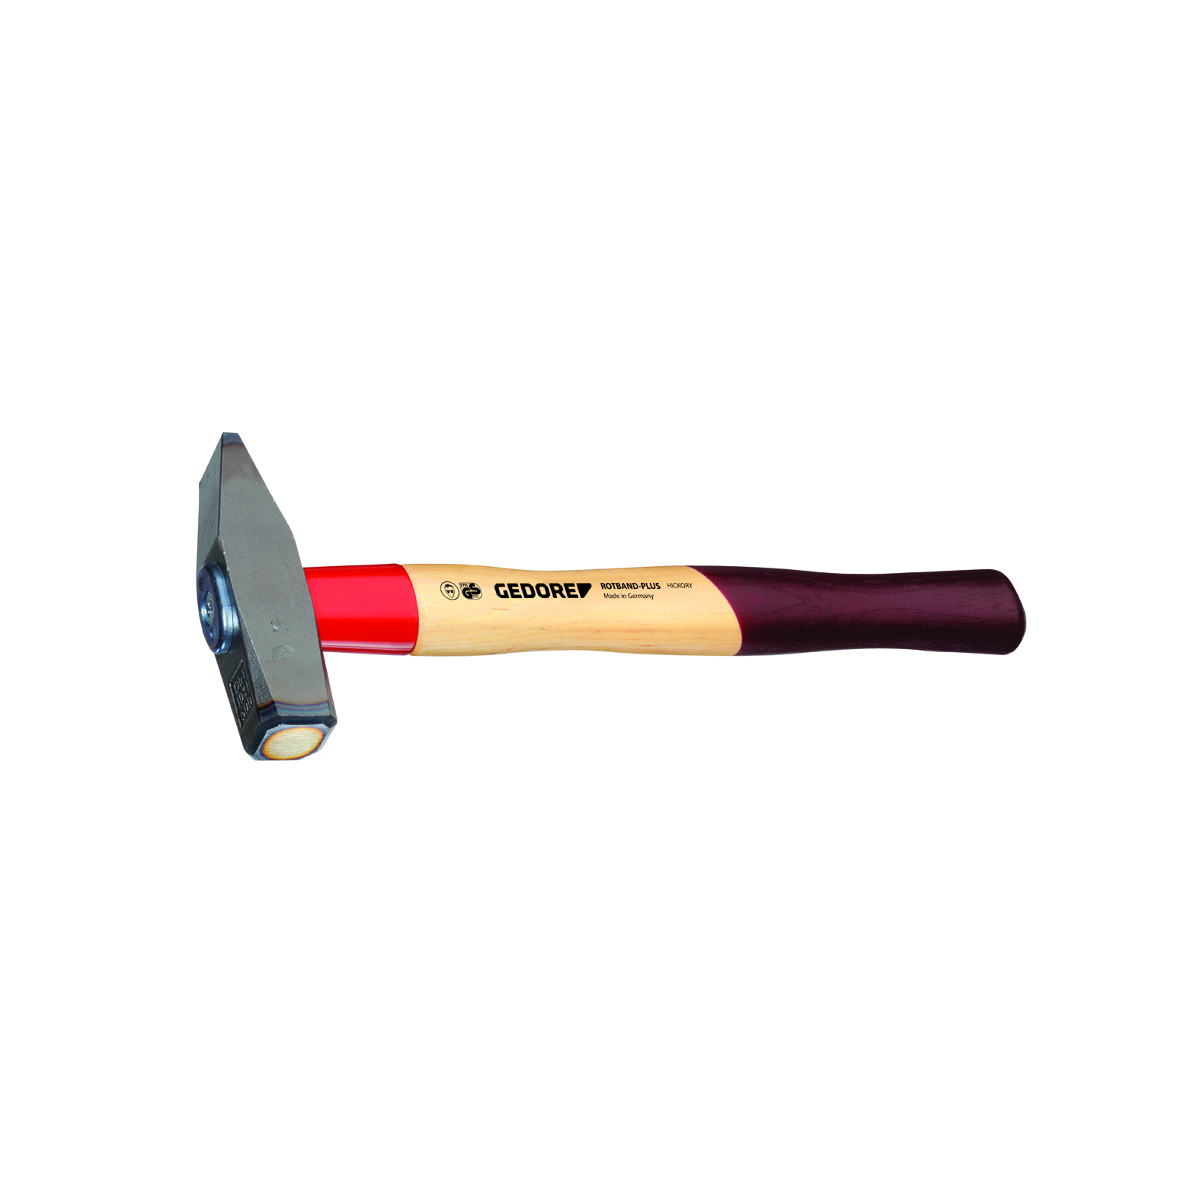 Gedore 8583230 600 H-500 Engineers' hammer ROTBAND-PLUS 500 g 